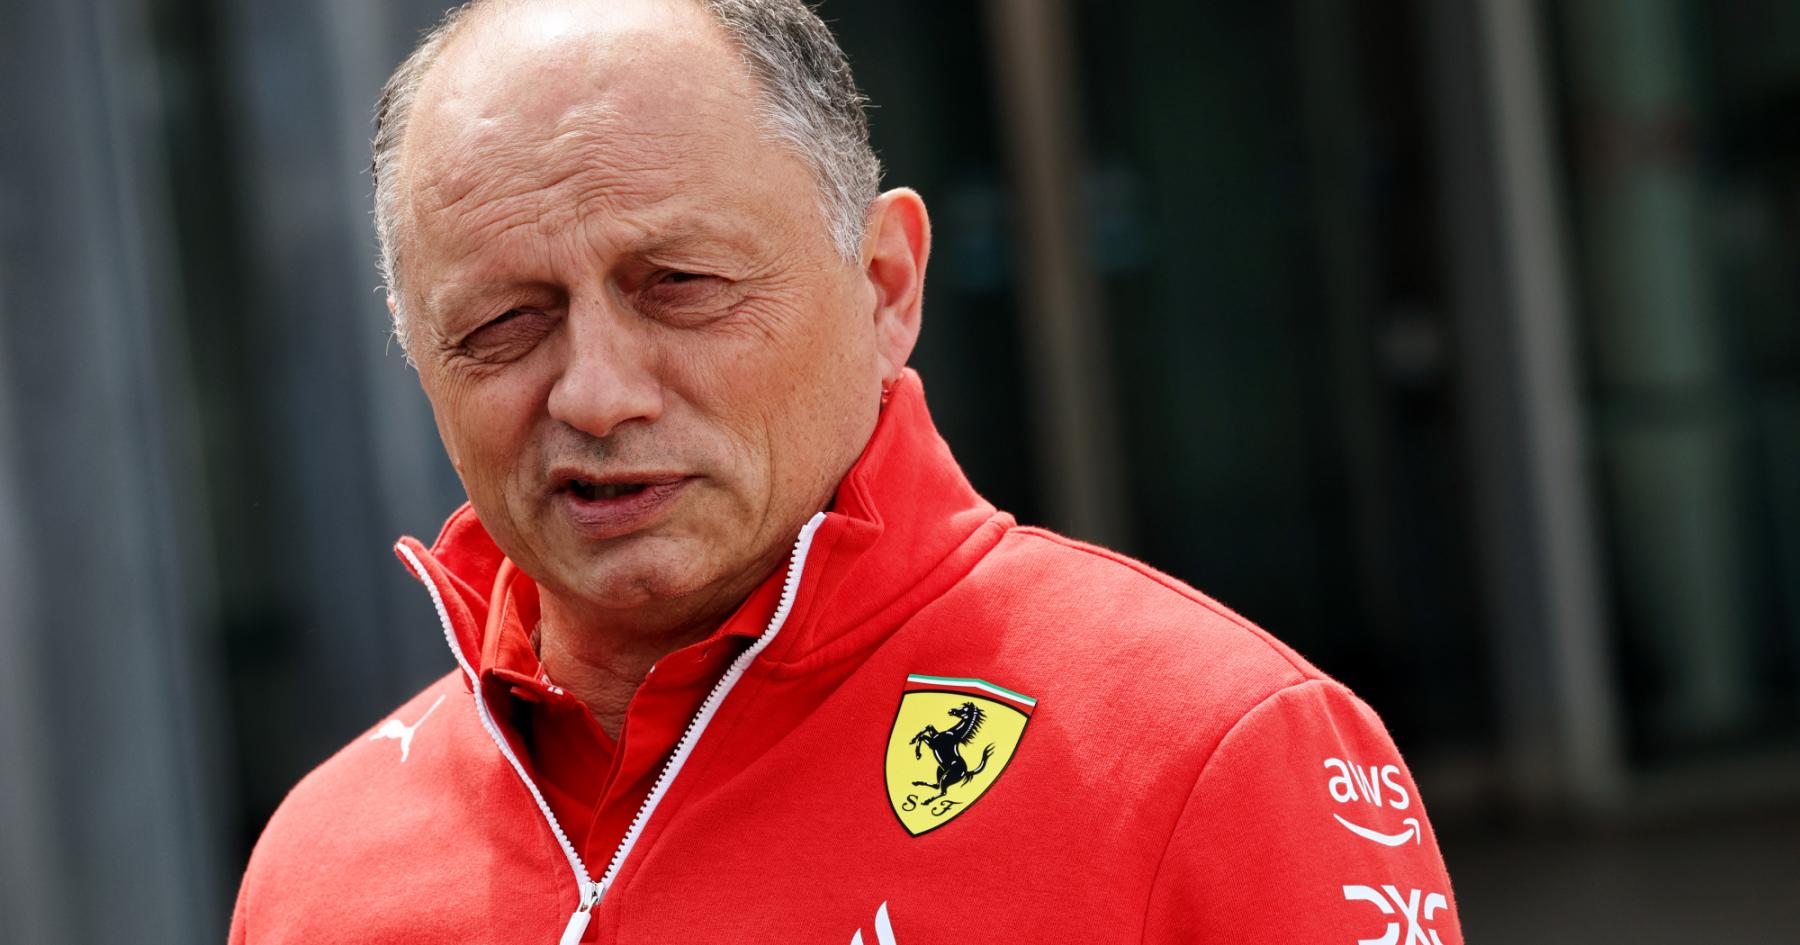 Seizing the Moment: Vasseur Spots Ferrari's Chance to Shine in China